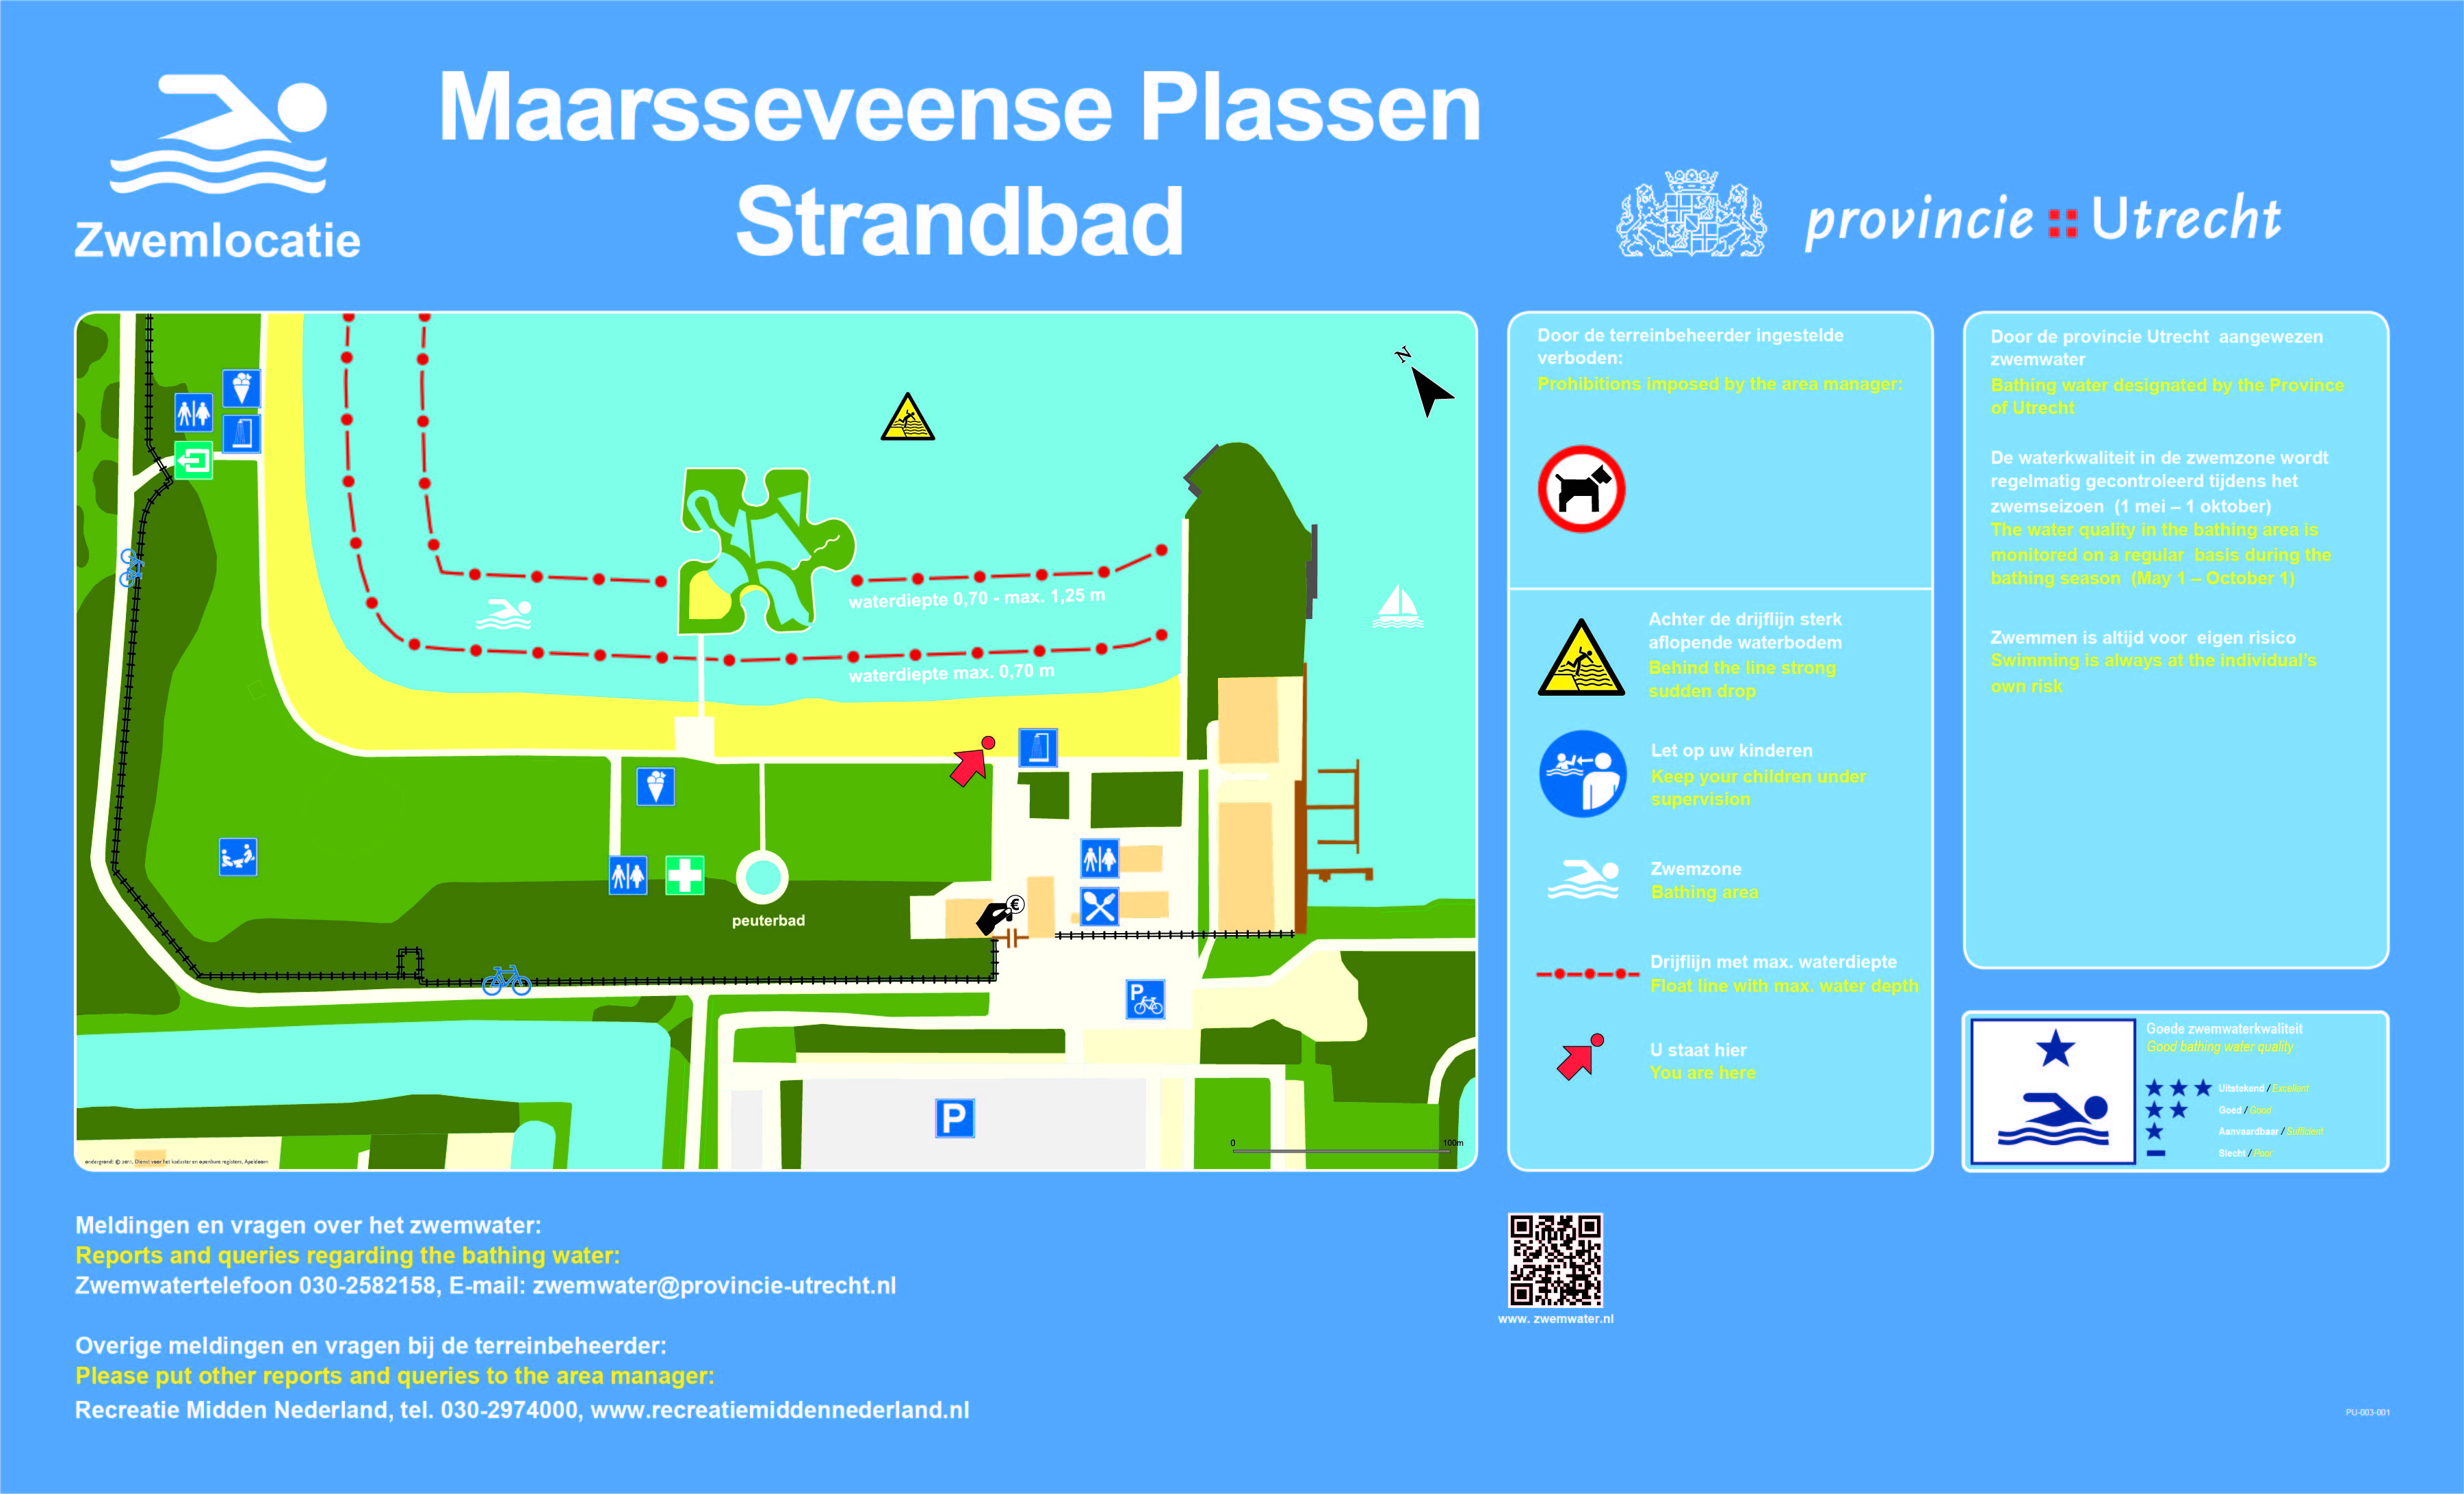 The information board at the swimming location Maarsseveense Plassen Strandbad